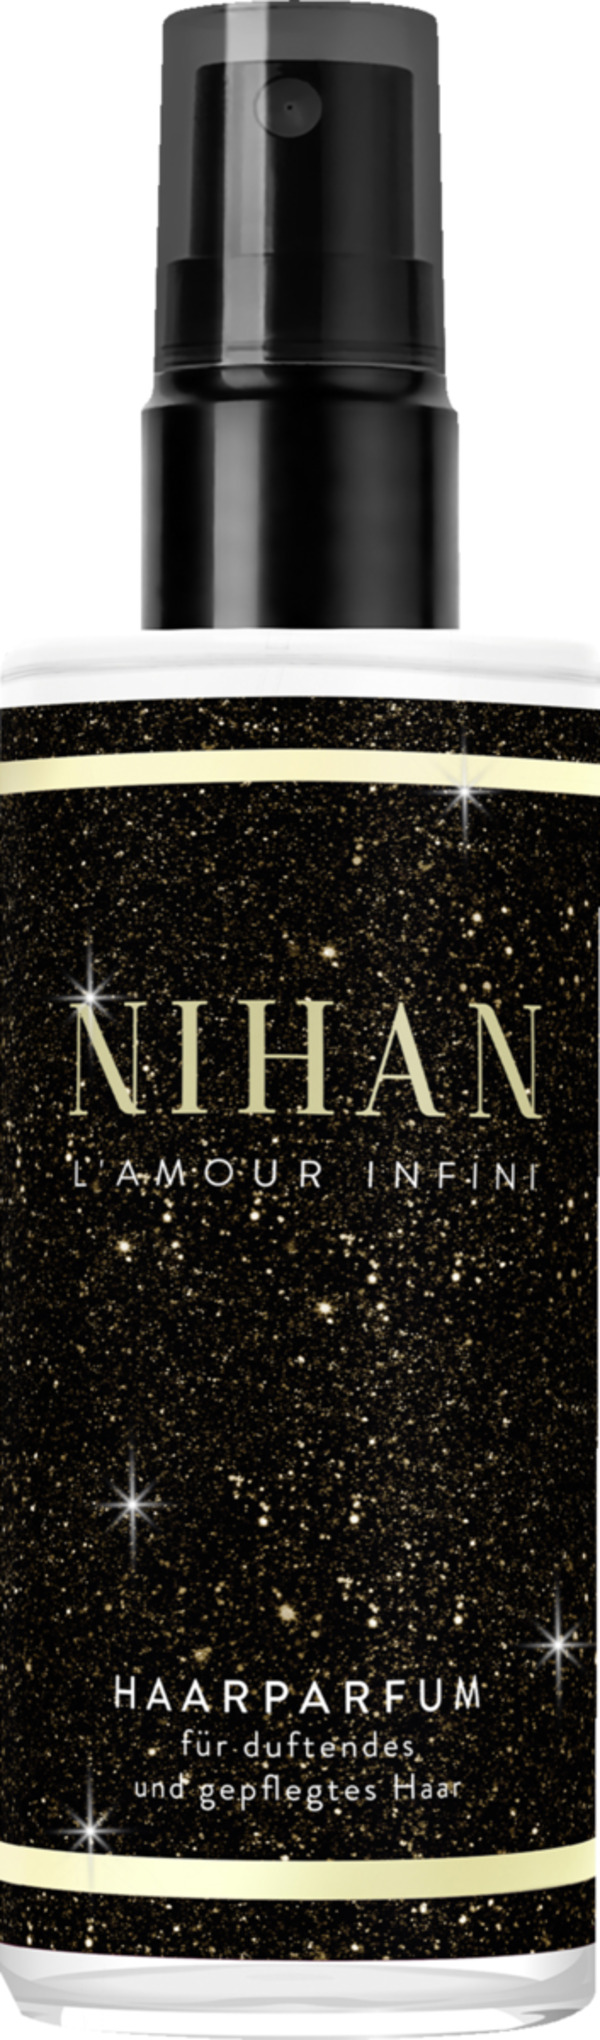 Bild 1 von Nihan L'amour Infini Haarparfum